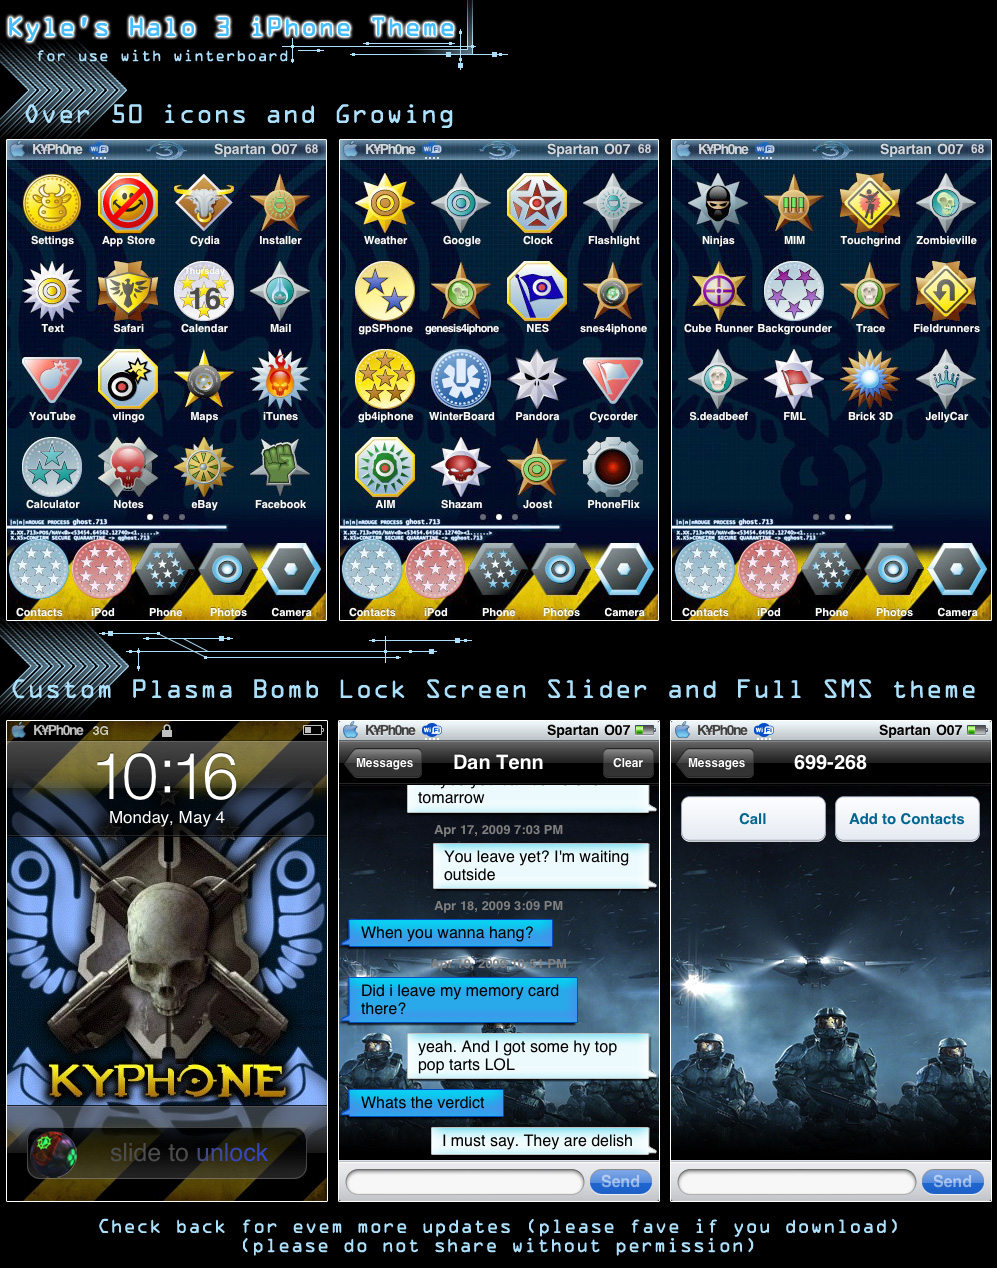 Kyle's Halo 3 iPhone Theme